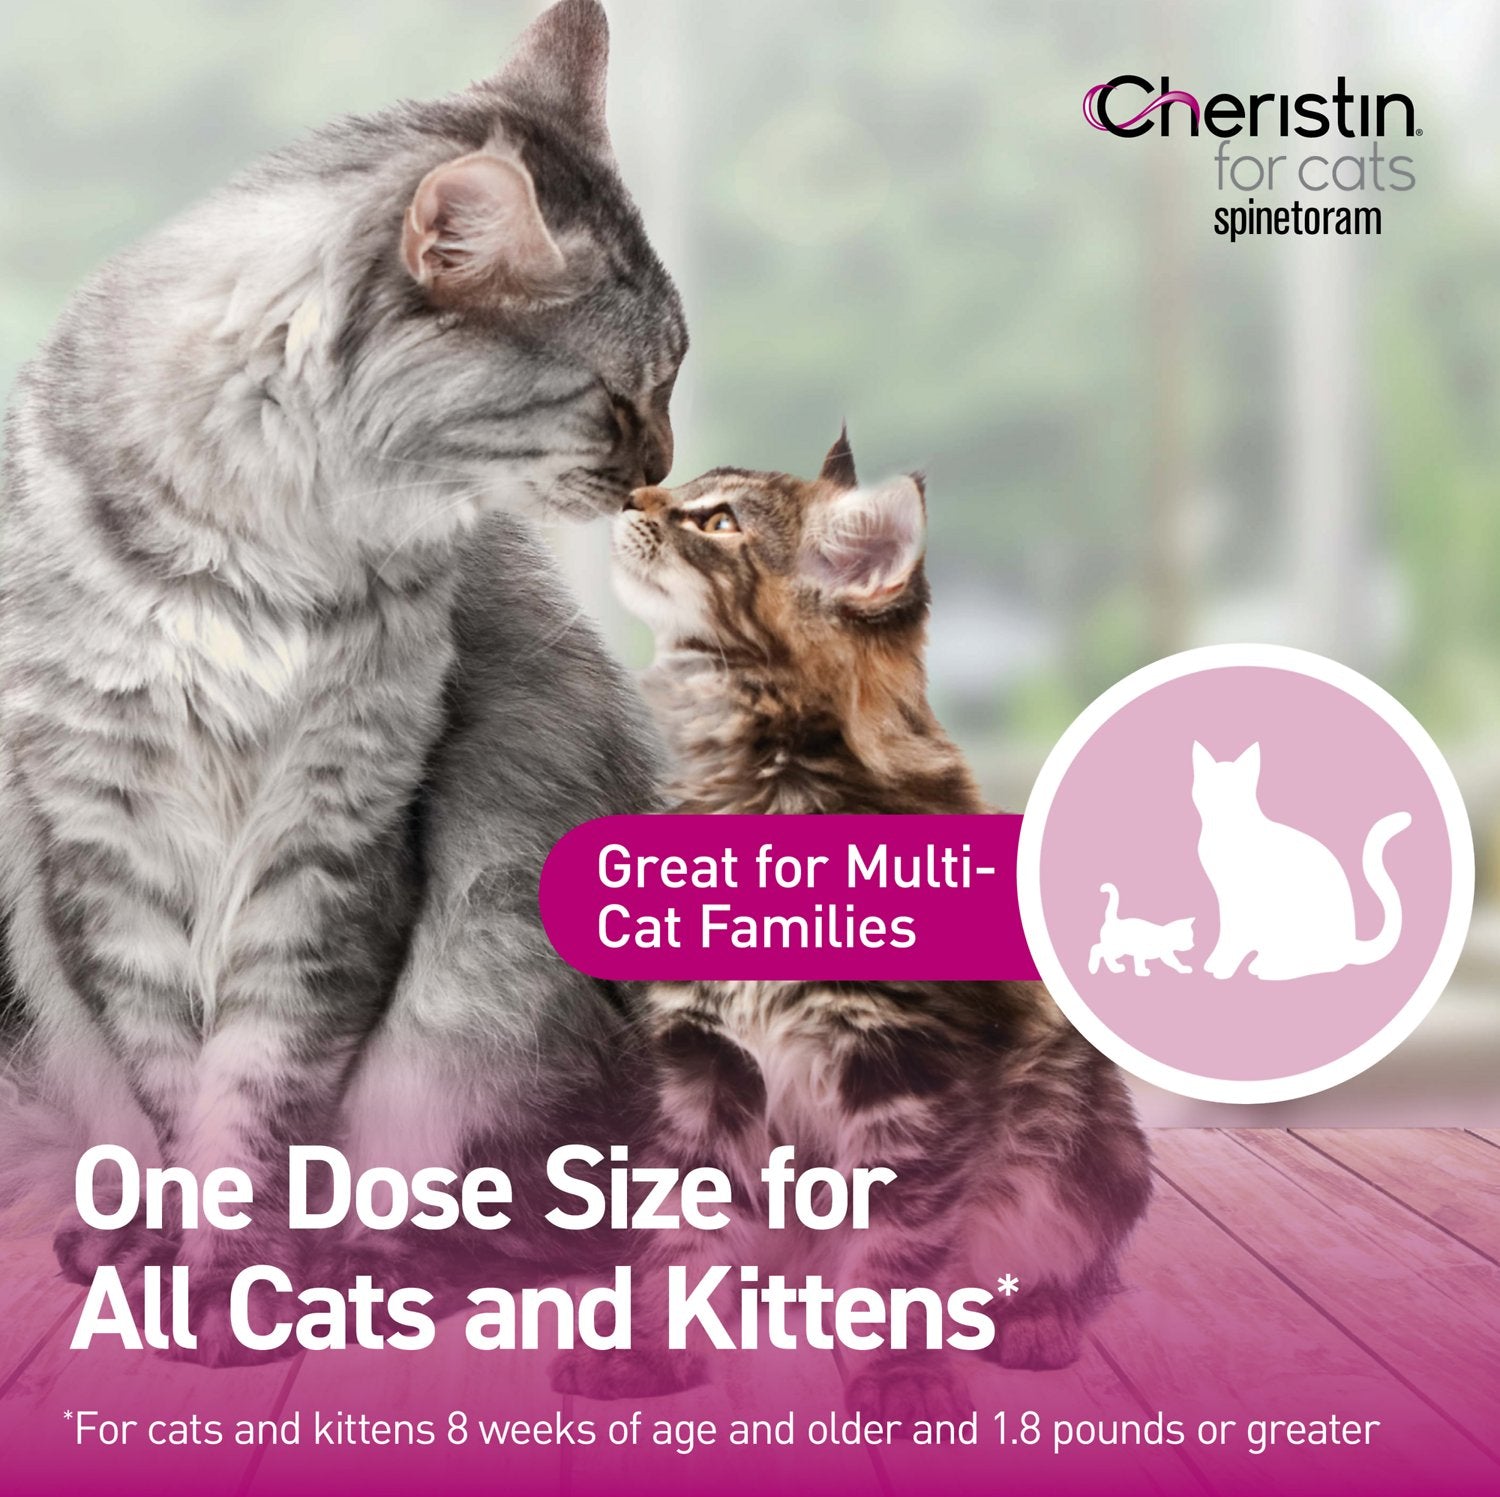 Cheristin Flea & Tick Topical Treatment For Cats